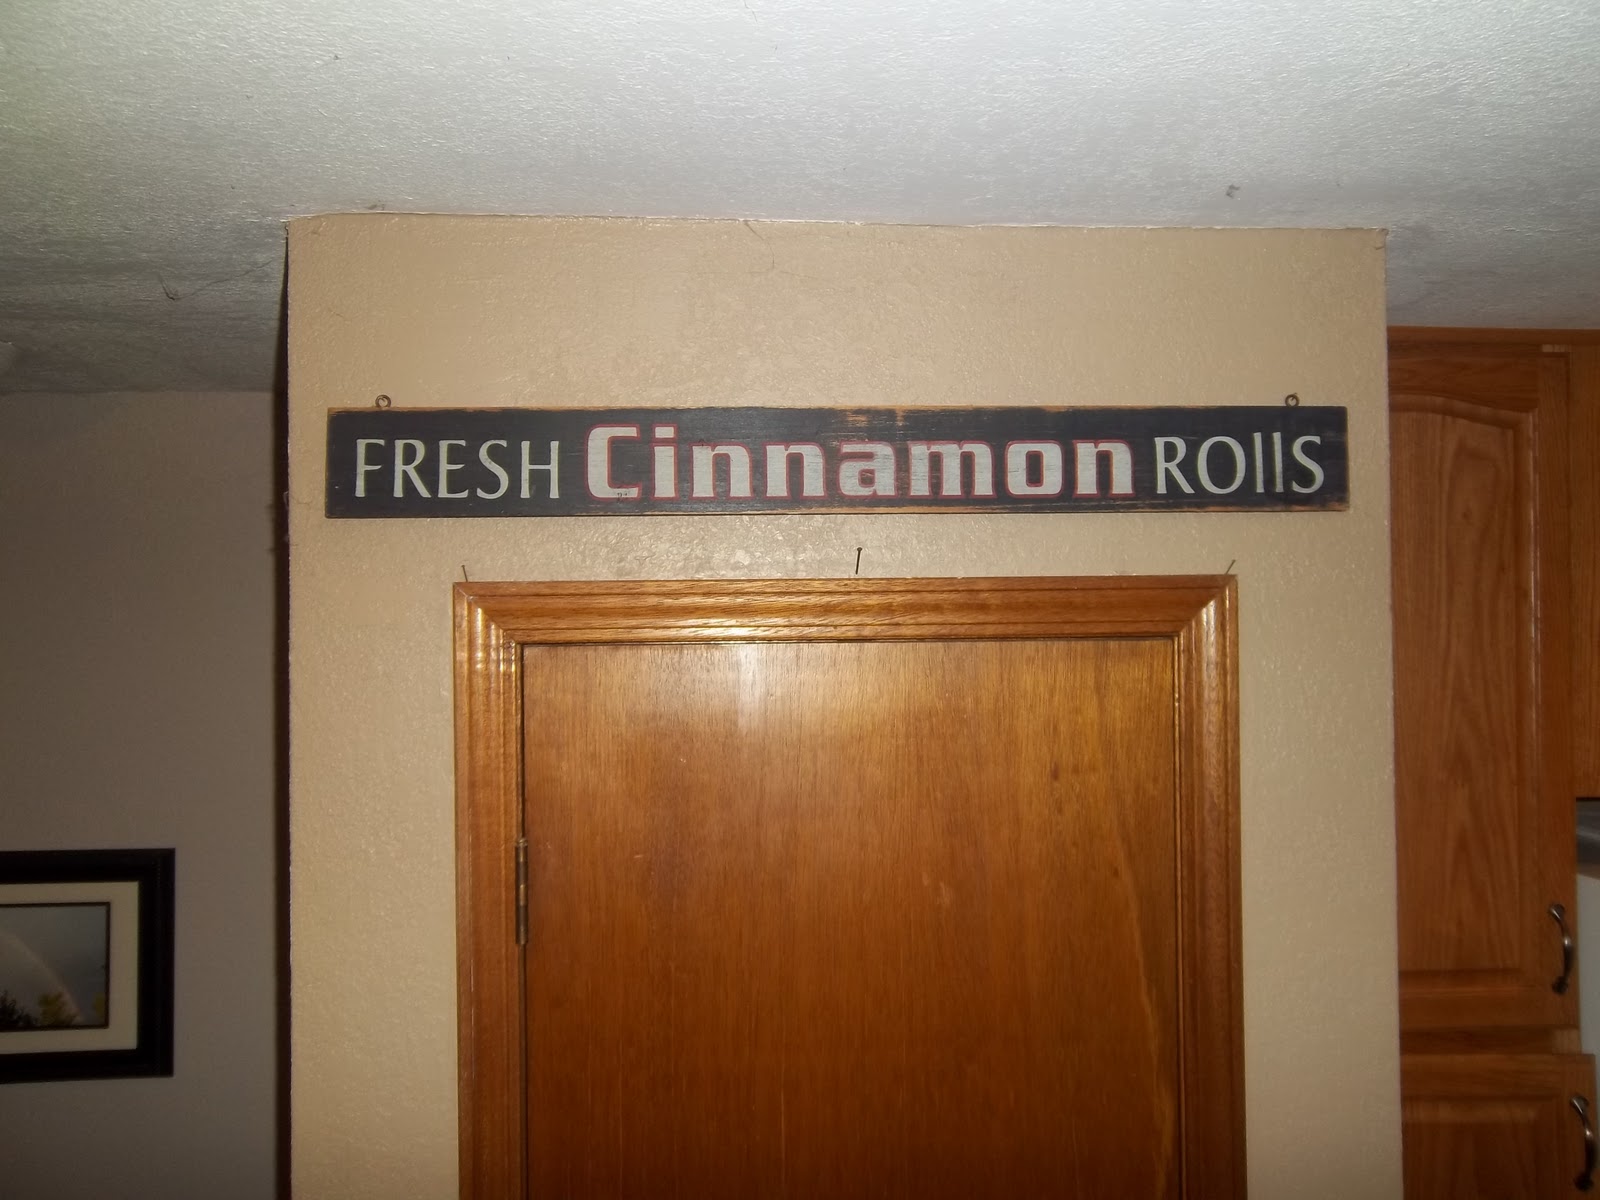 Fresh Cinnamon Rolls sign